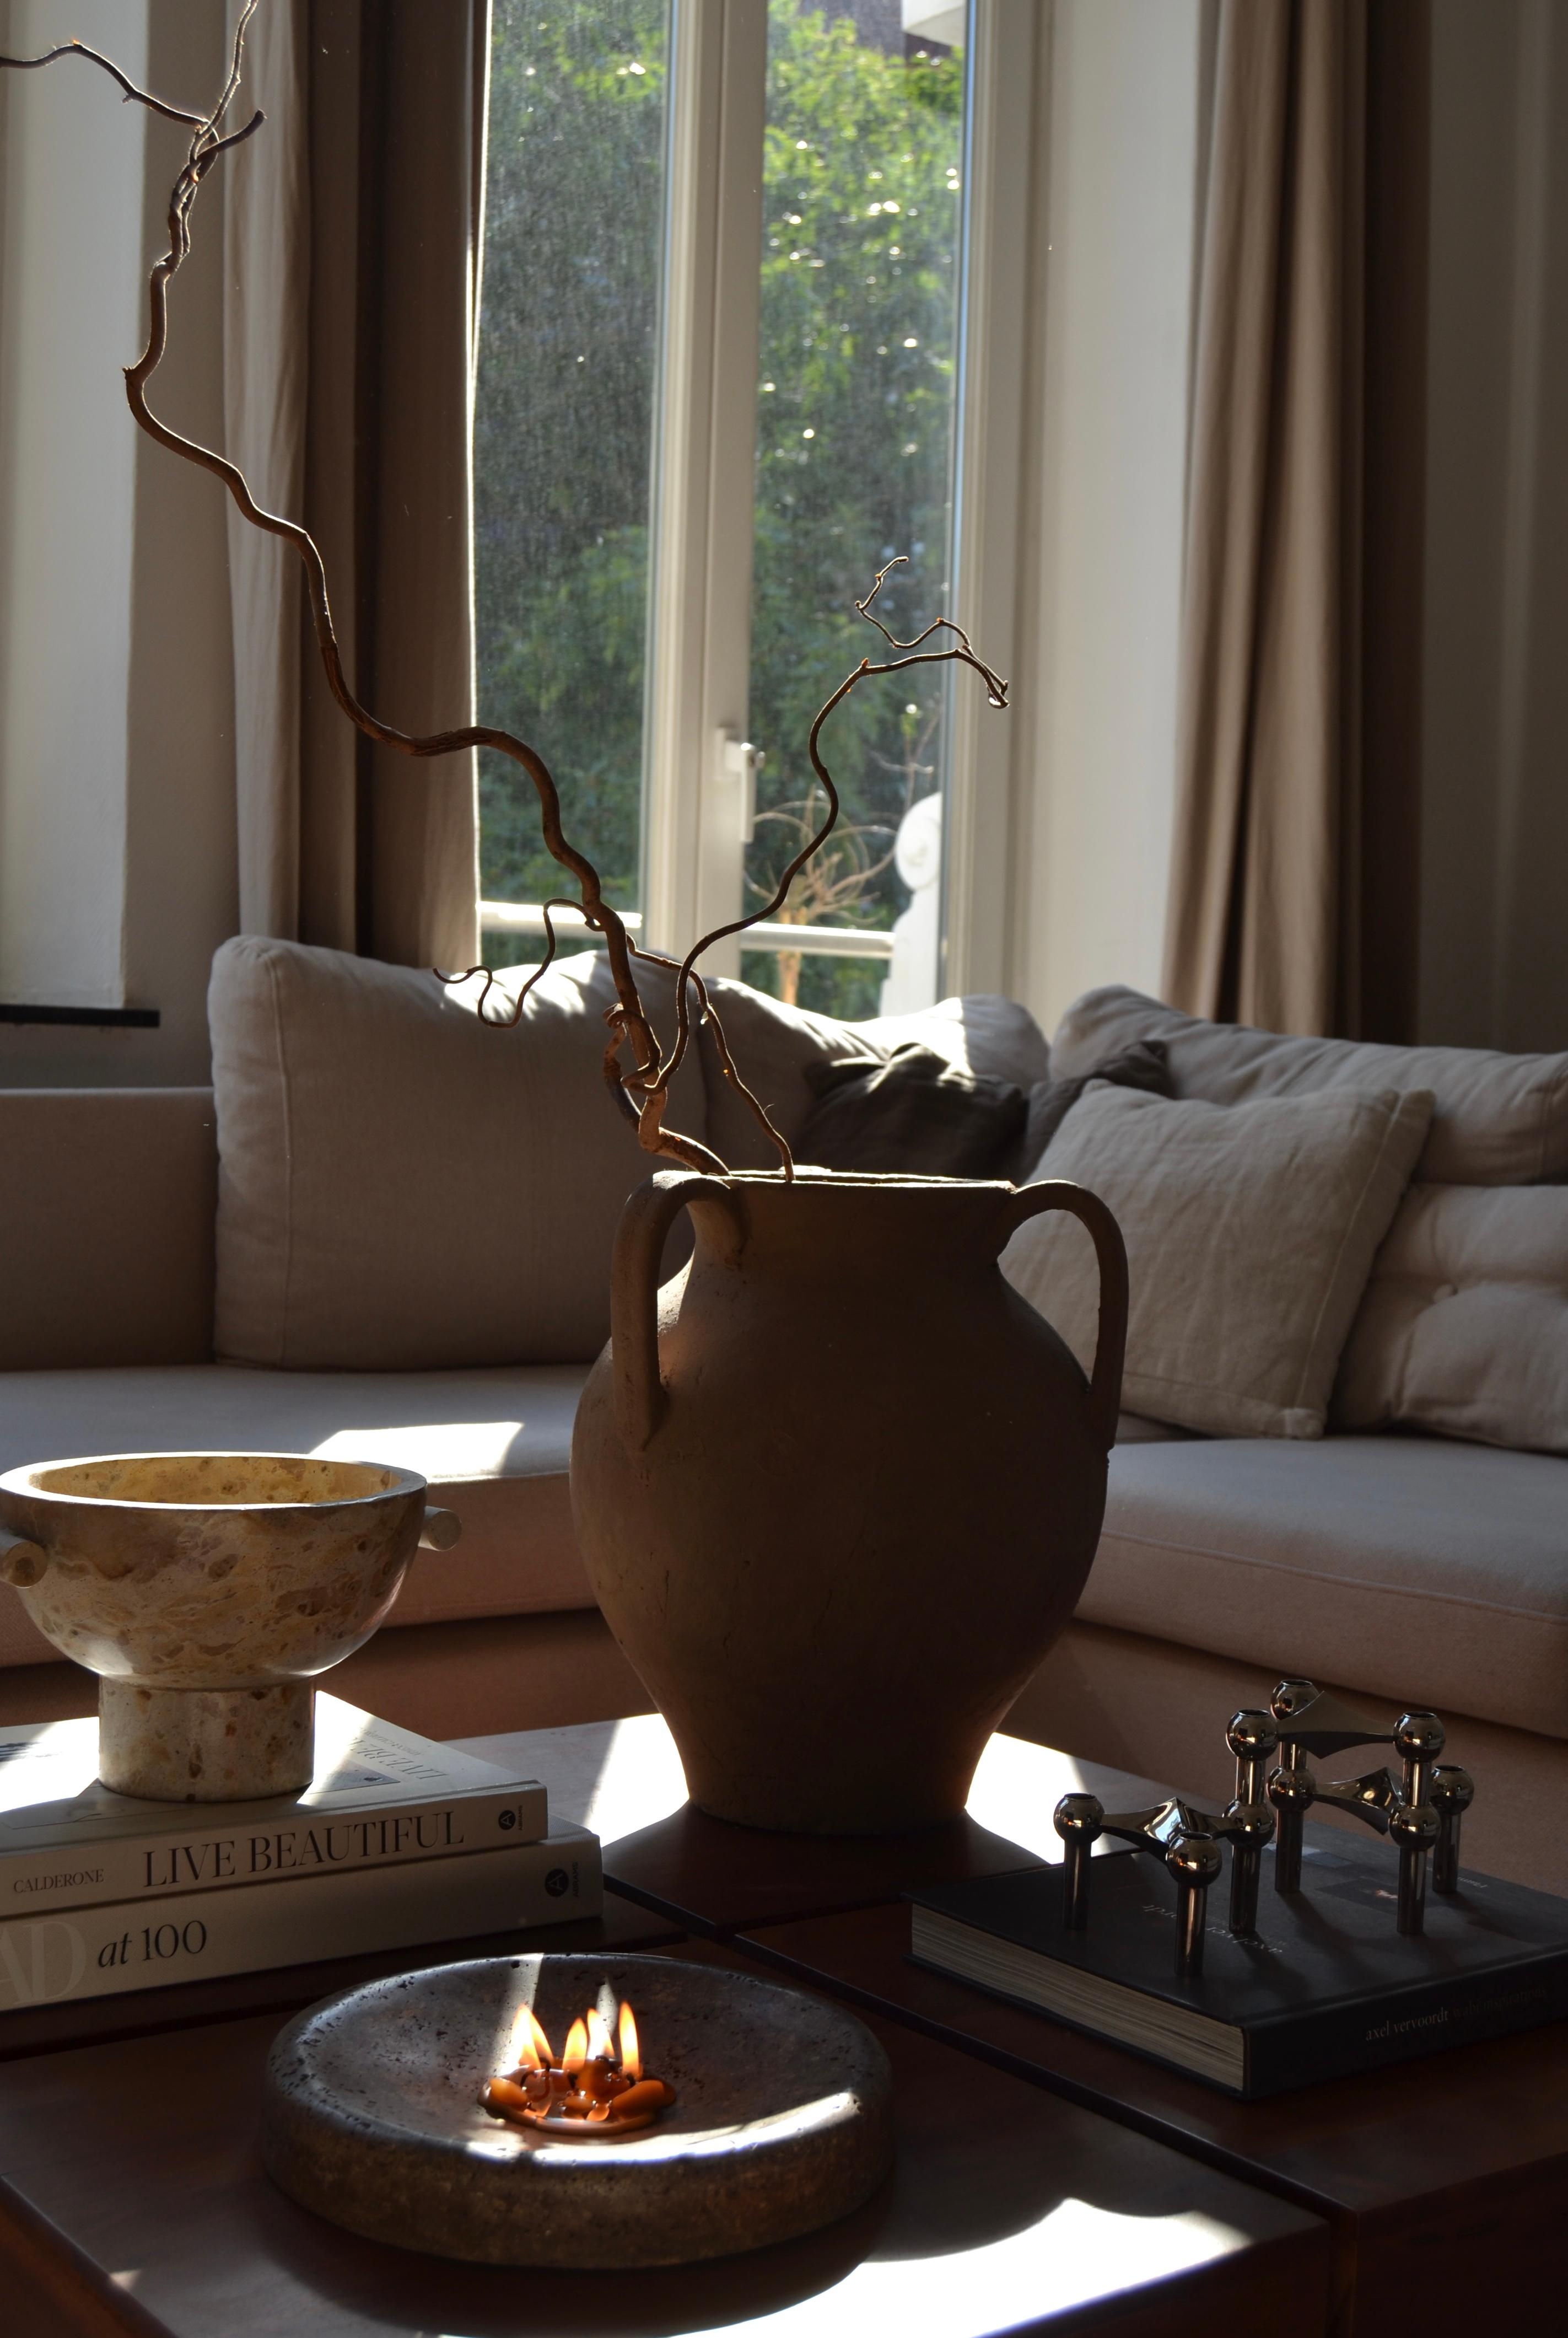 Vasenliebe🏺
#altbau #altbauwohnung #livingroom #homedecor #home #homedesign #interiordesign #deco